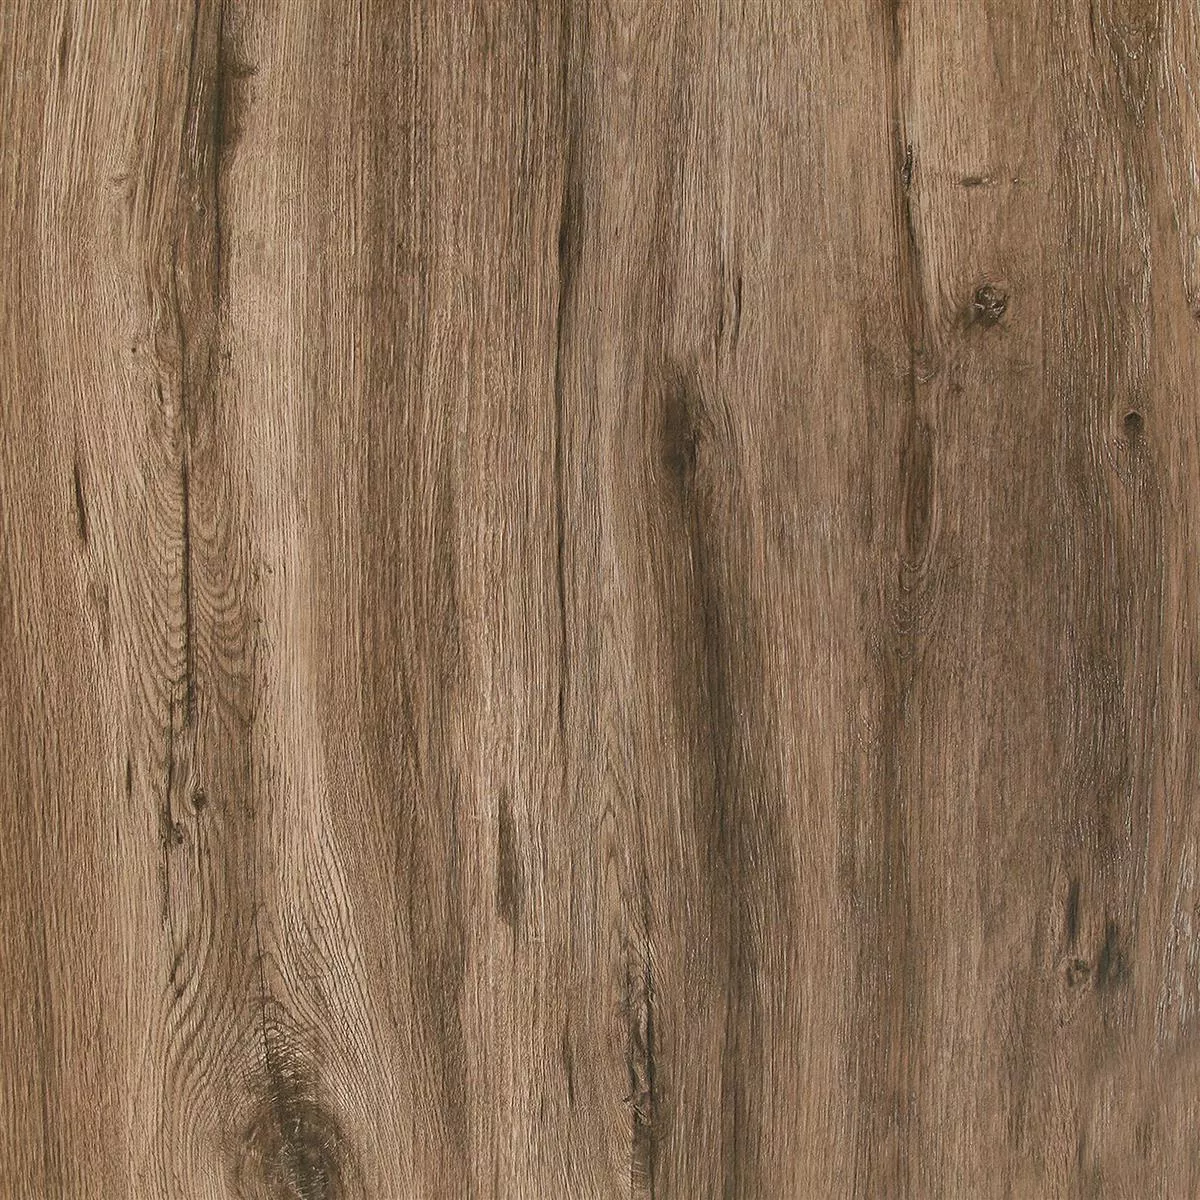 Próbka Taras Płyta Starwood Wygląd Drewna Ebony 60x60cm